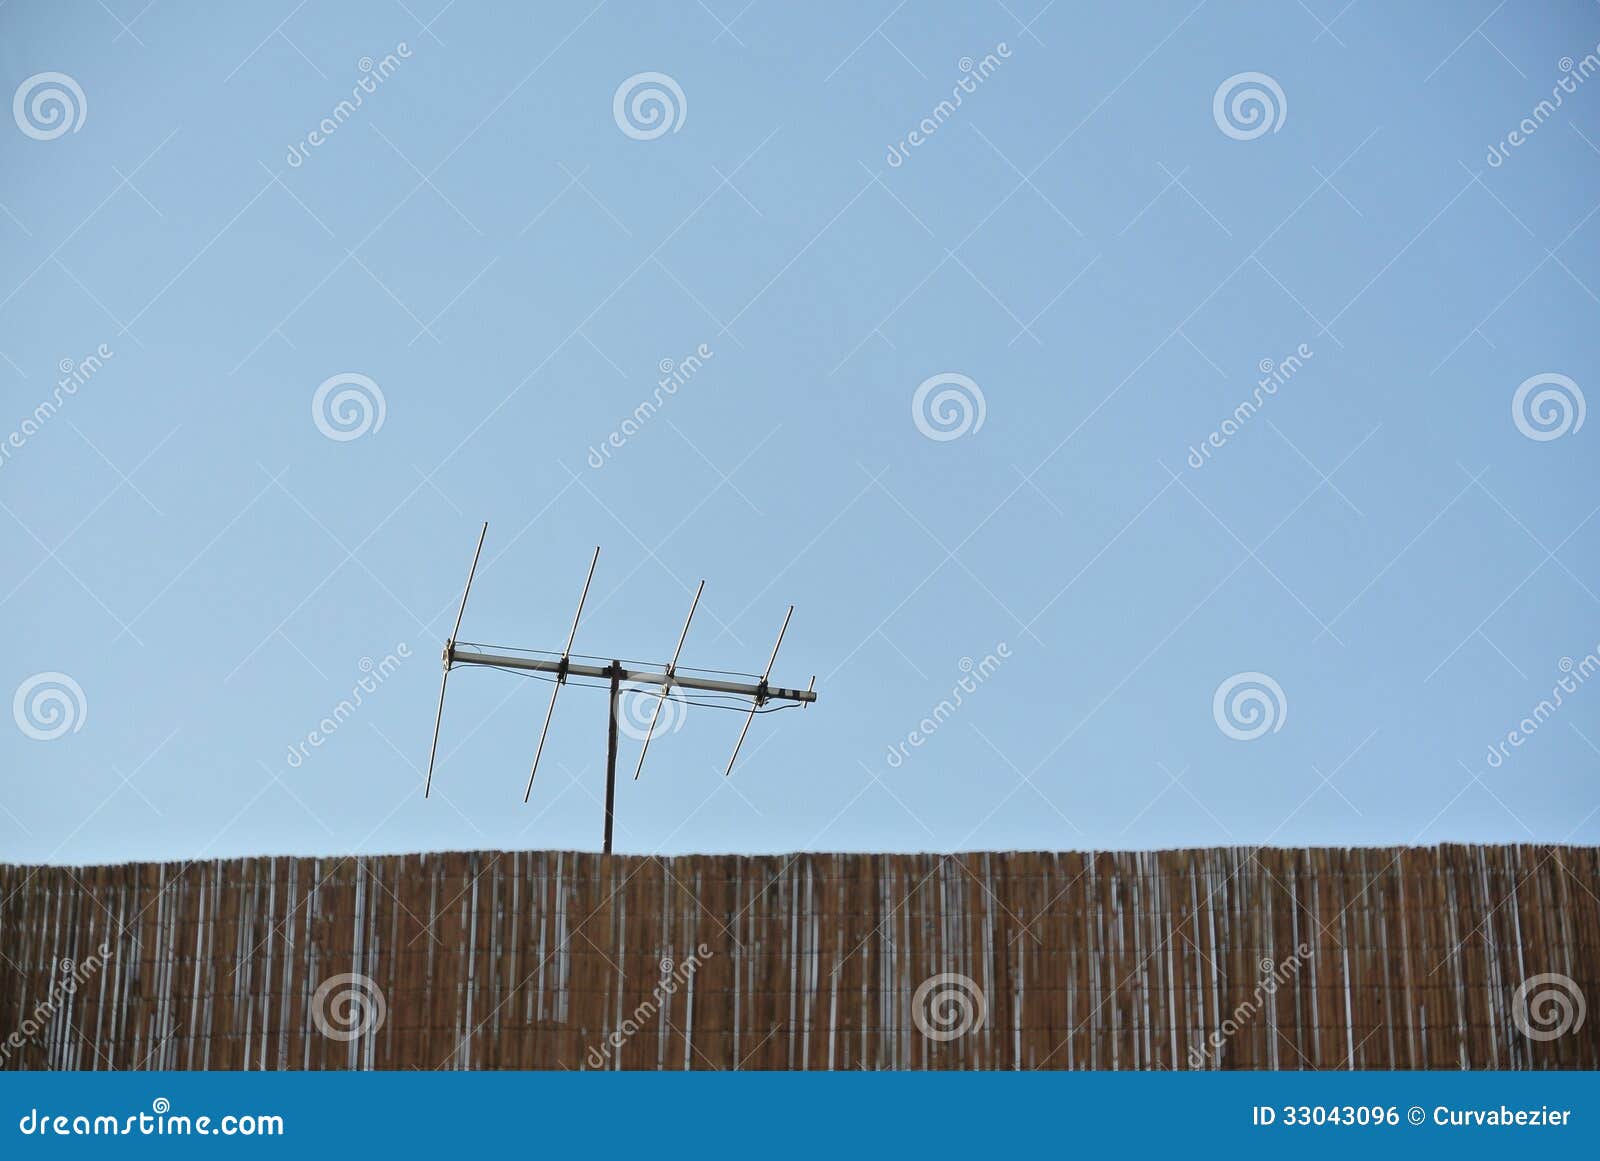 antenna communicationwith copyspace